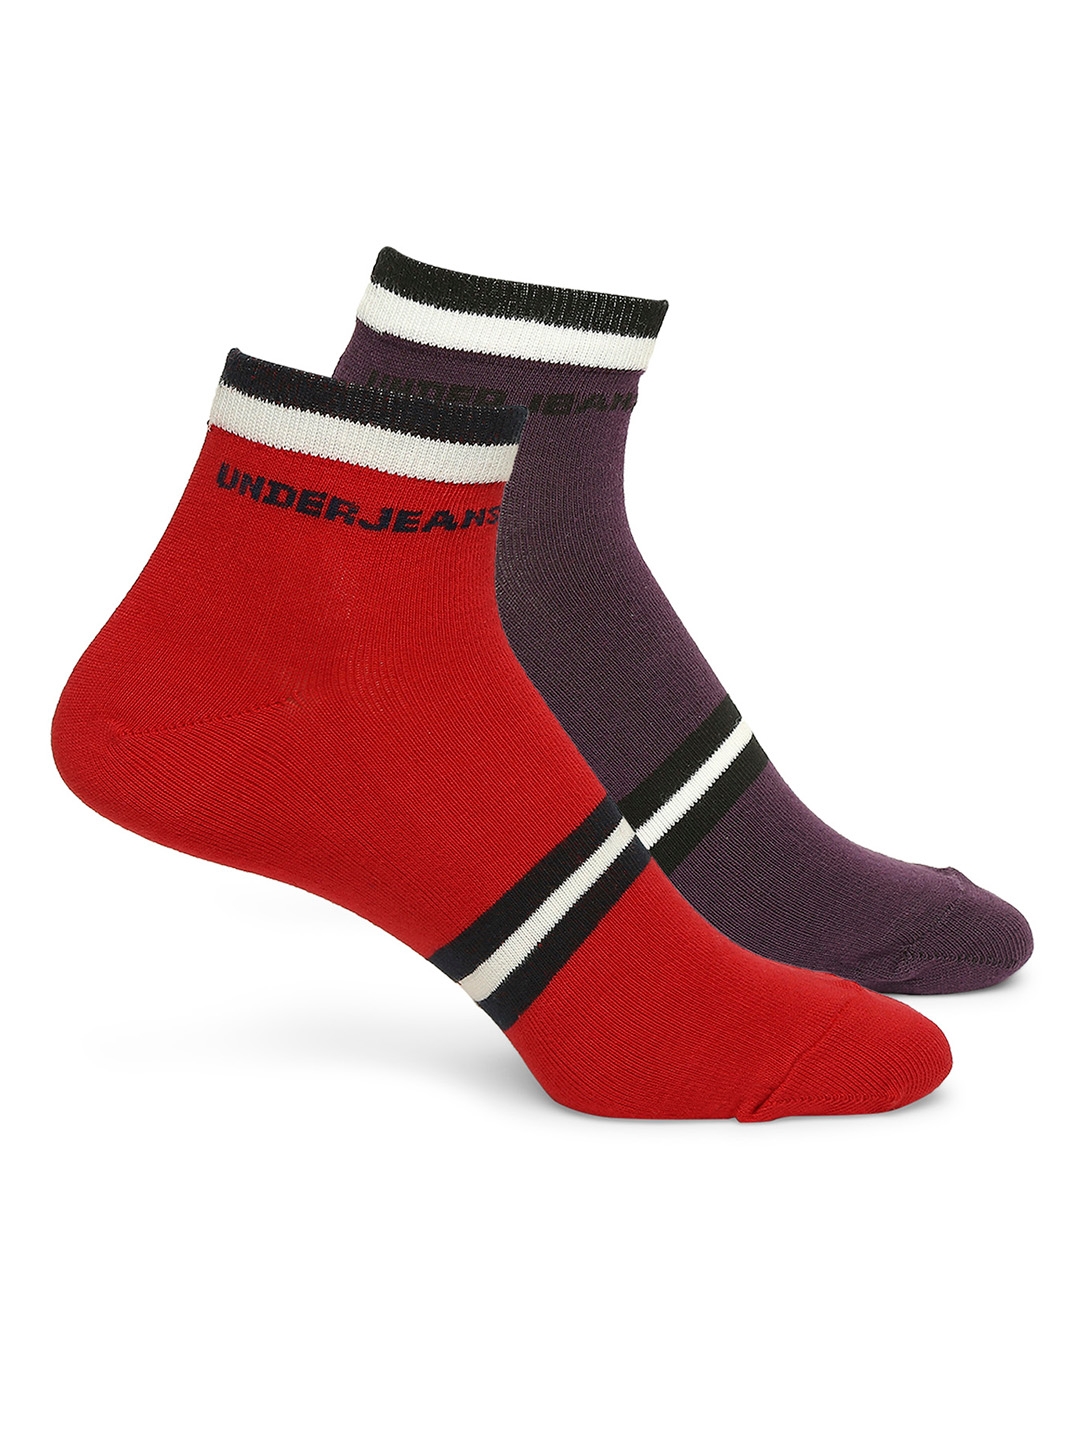 spykar | Underjeans by Spykar Premium Purple & Red Ankle Length Socks - Pack Of 2